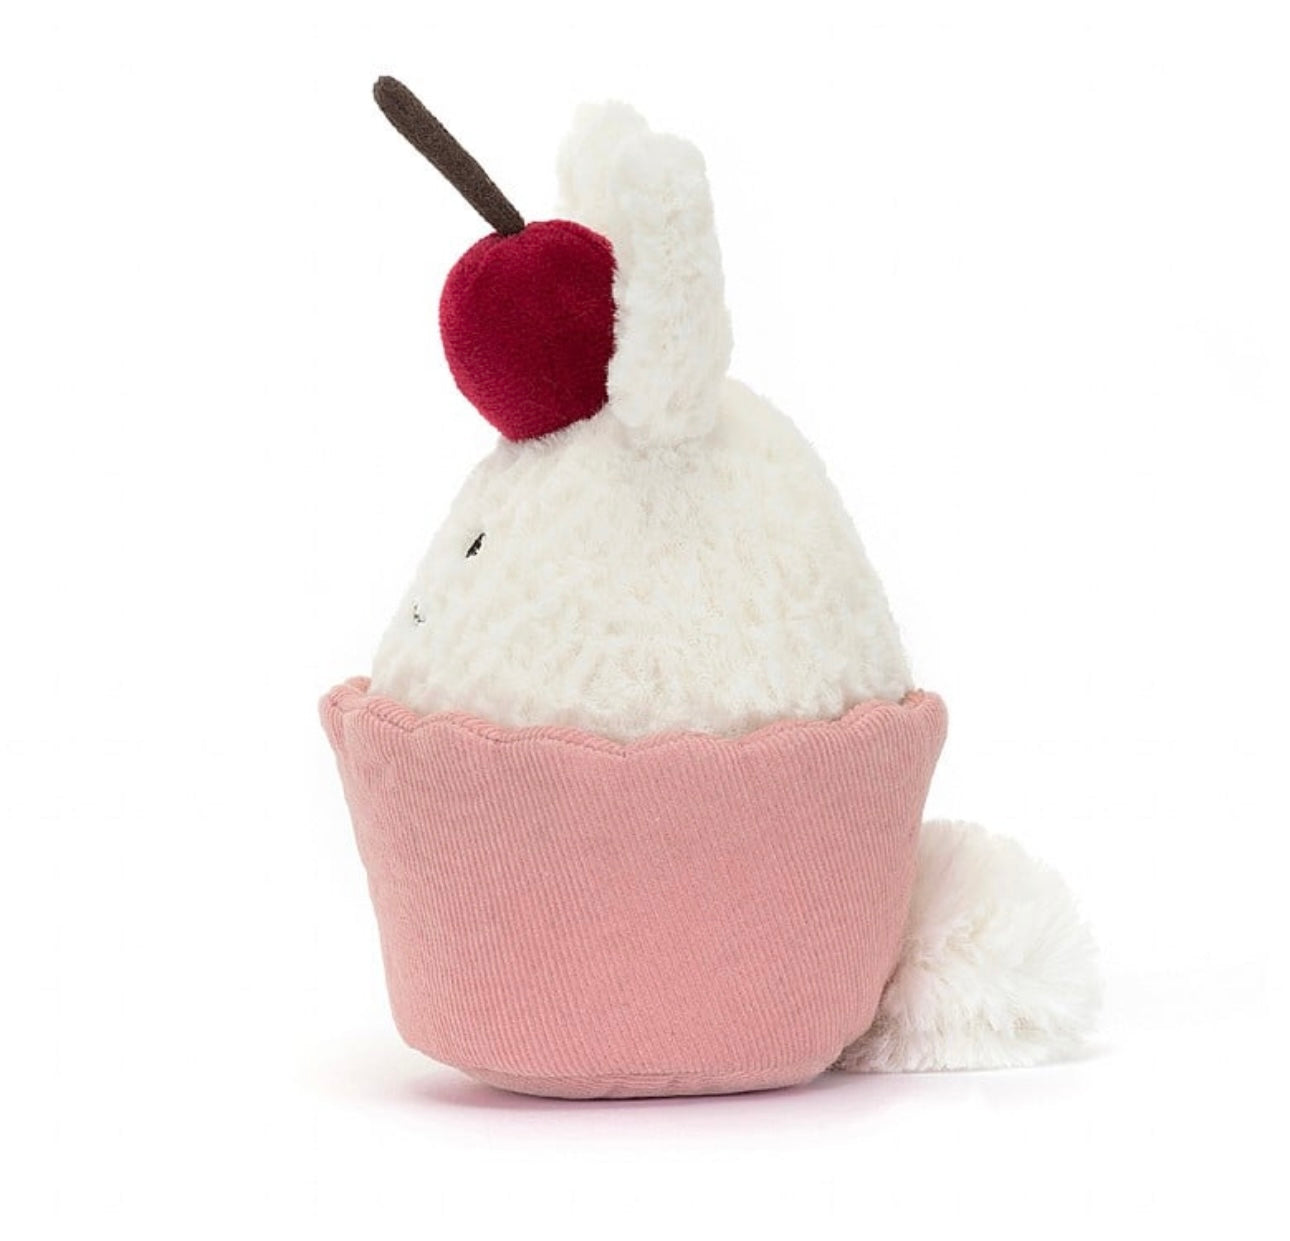 JellyCat Dainty Dessert Bunny Cupcake